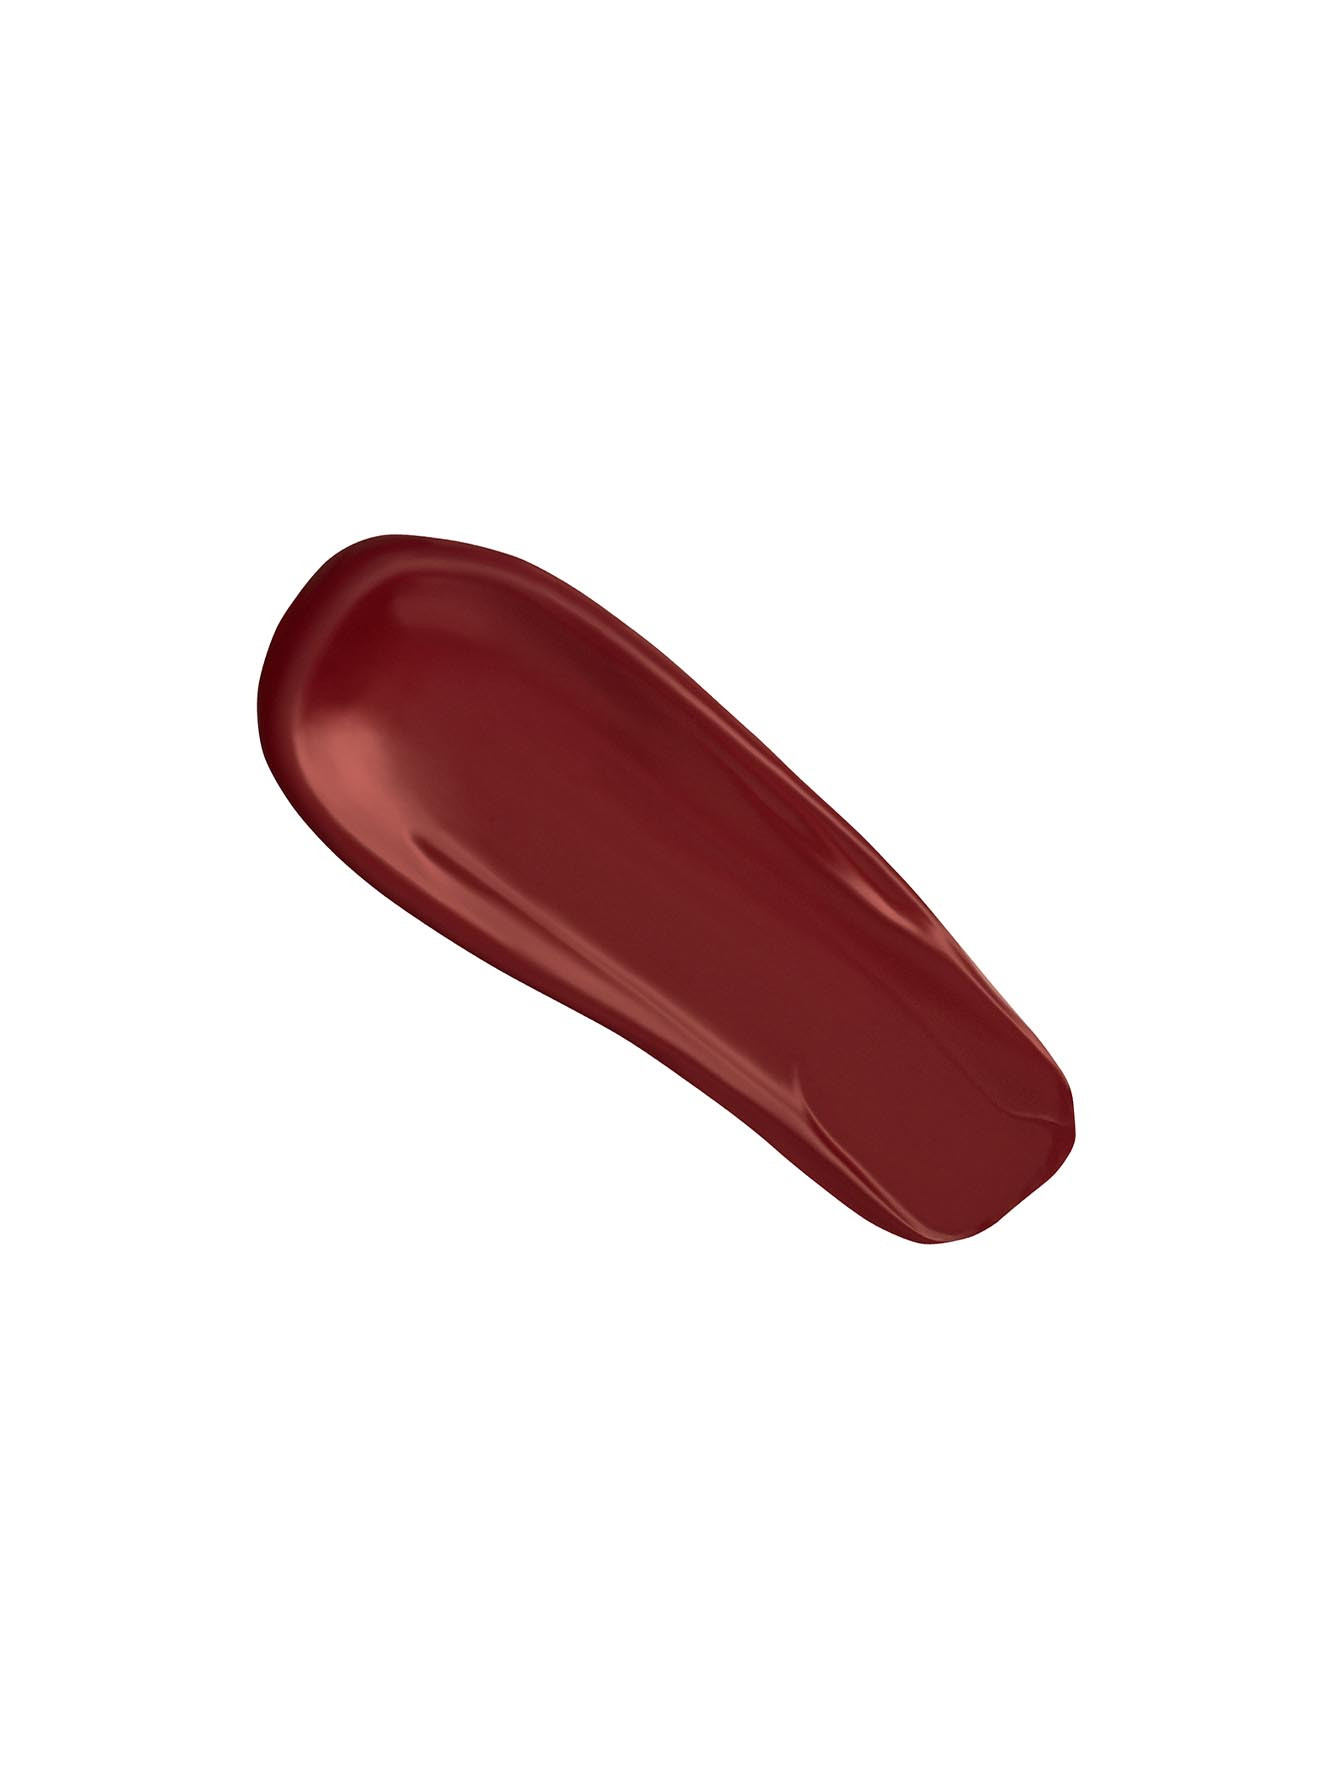 Матовая губная помада Lip-Expert Matte Liquid Lipstick, 5 Flirty Brown, 4 мл - Обтравка1